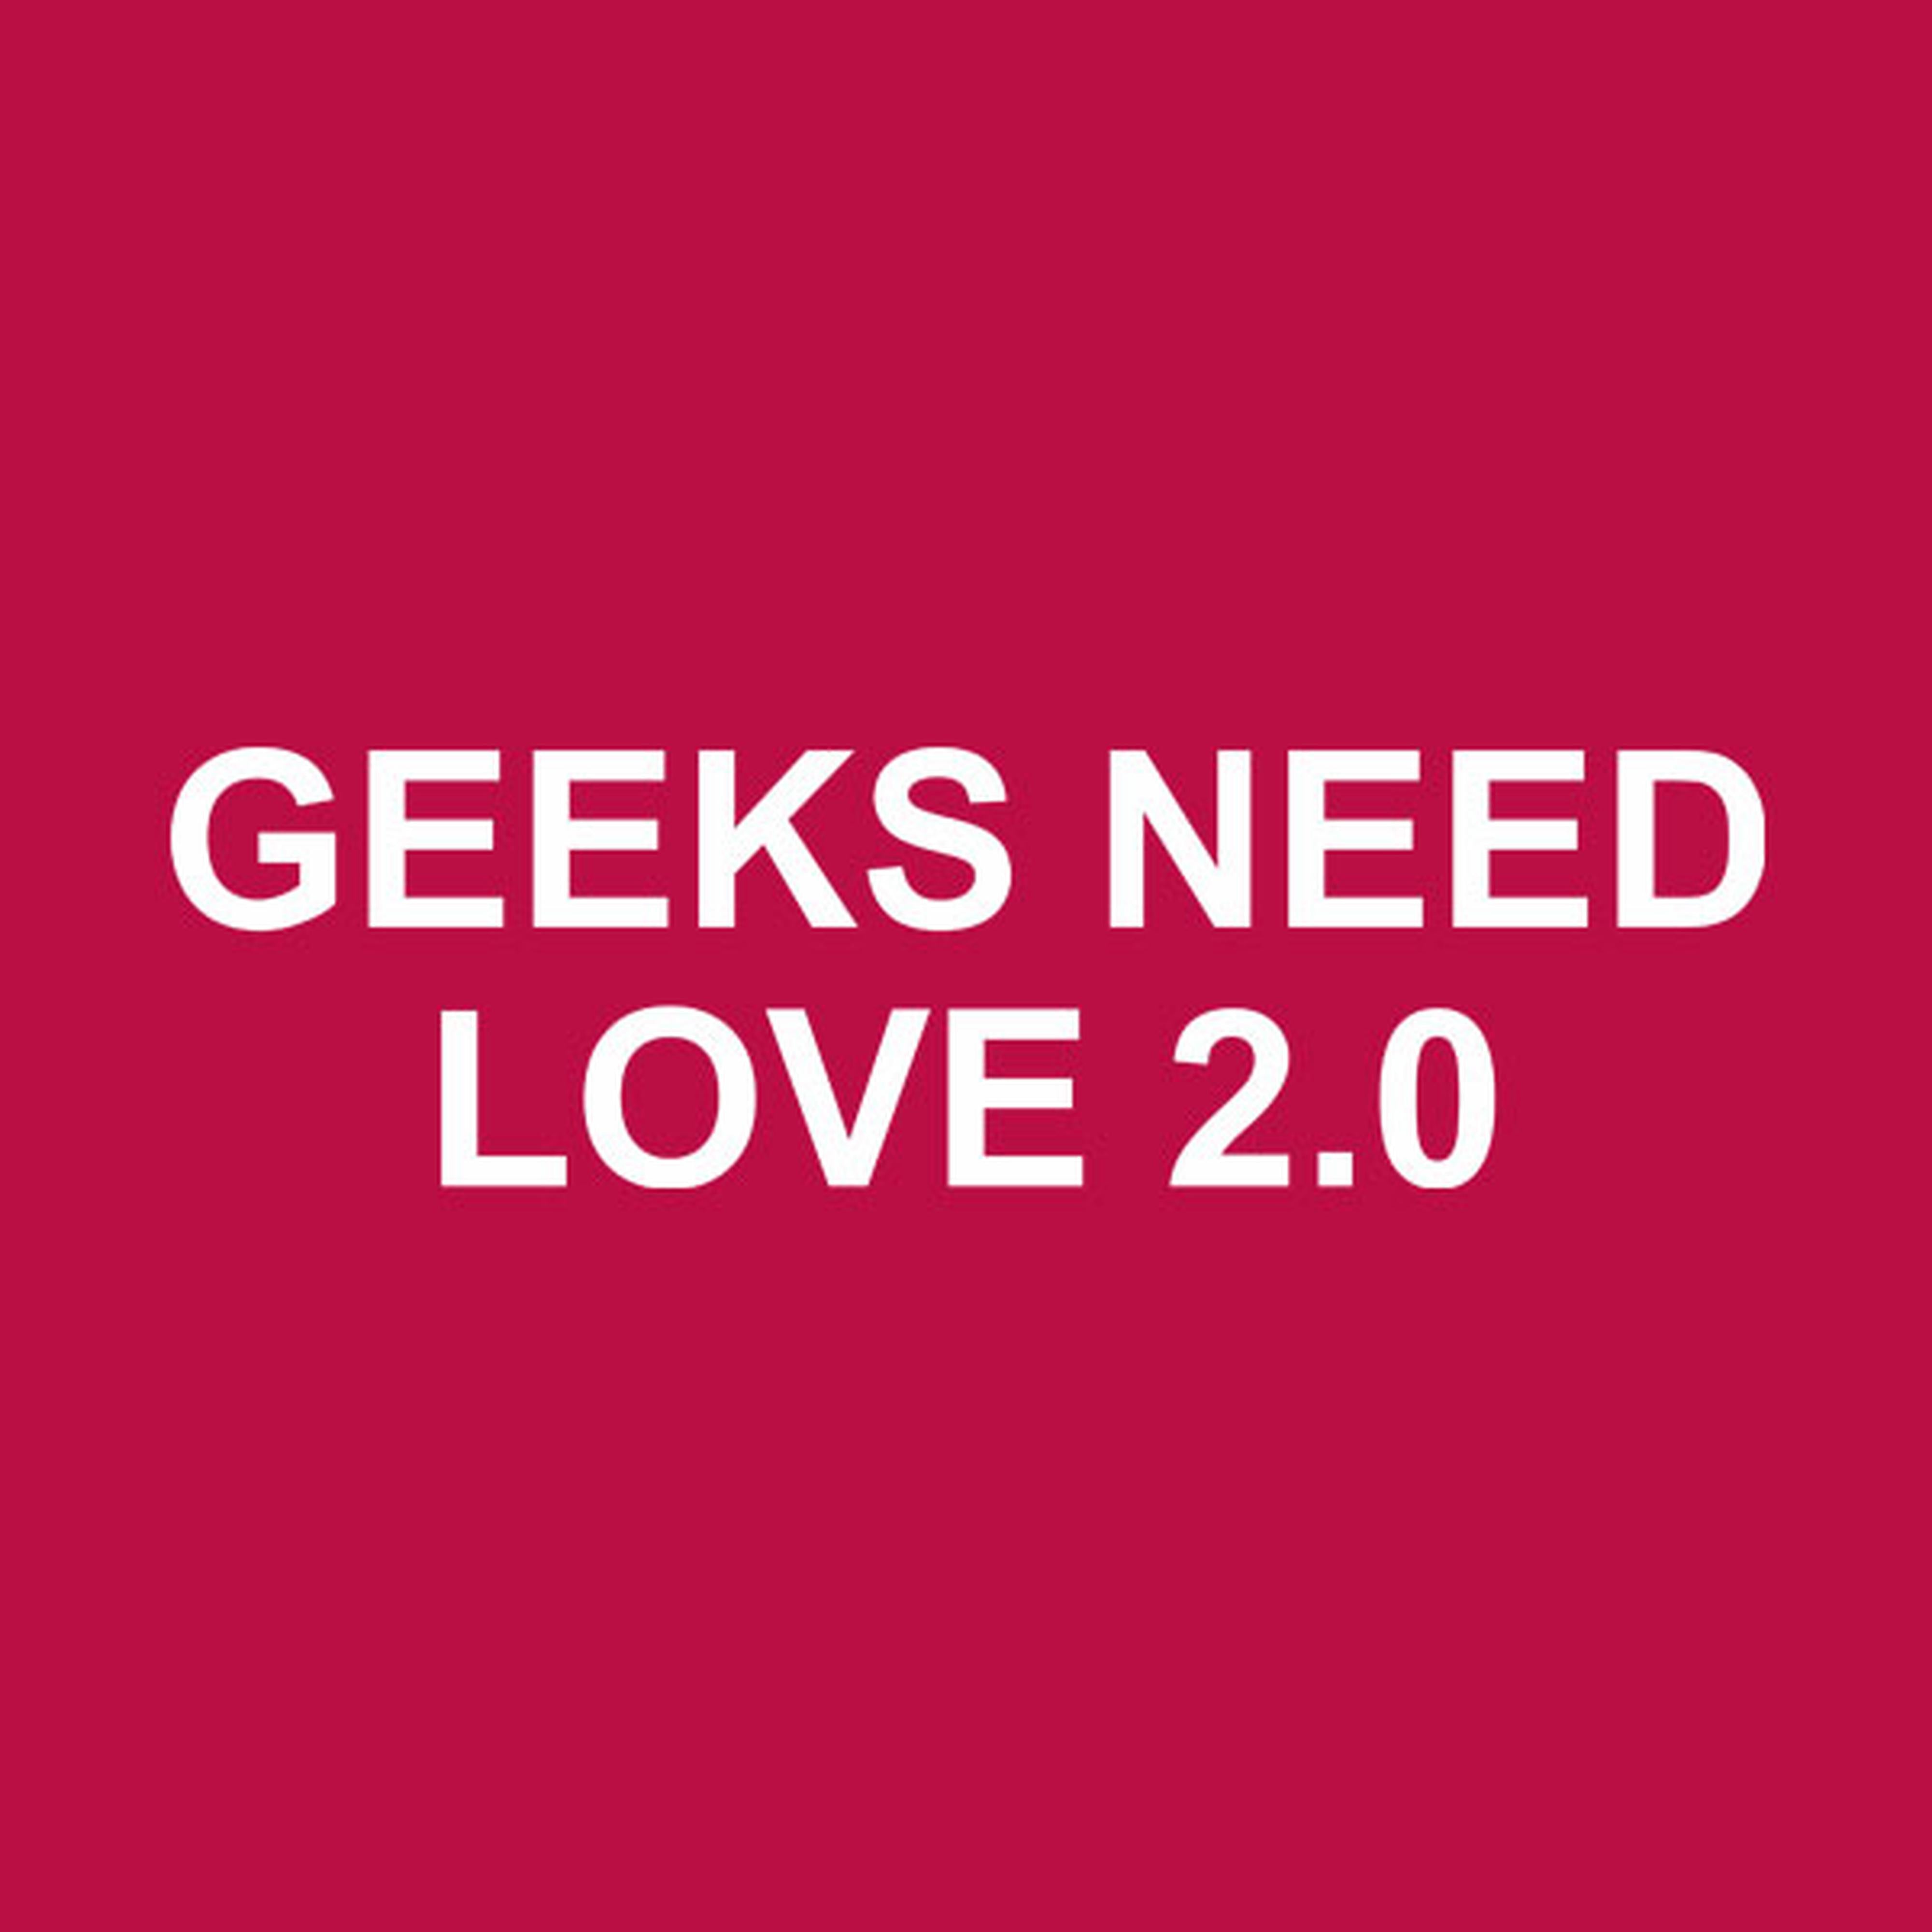 Geeks need love 2.0 - T-shirt